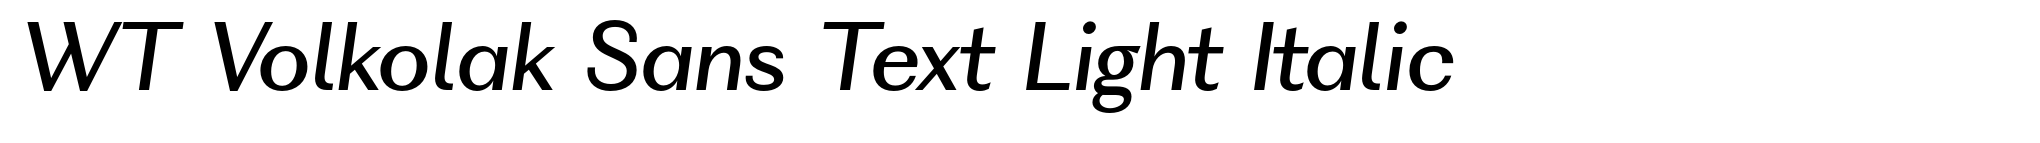 WT Volkolak Sans Text Light Italic image